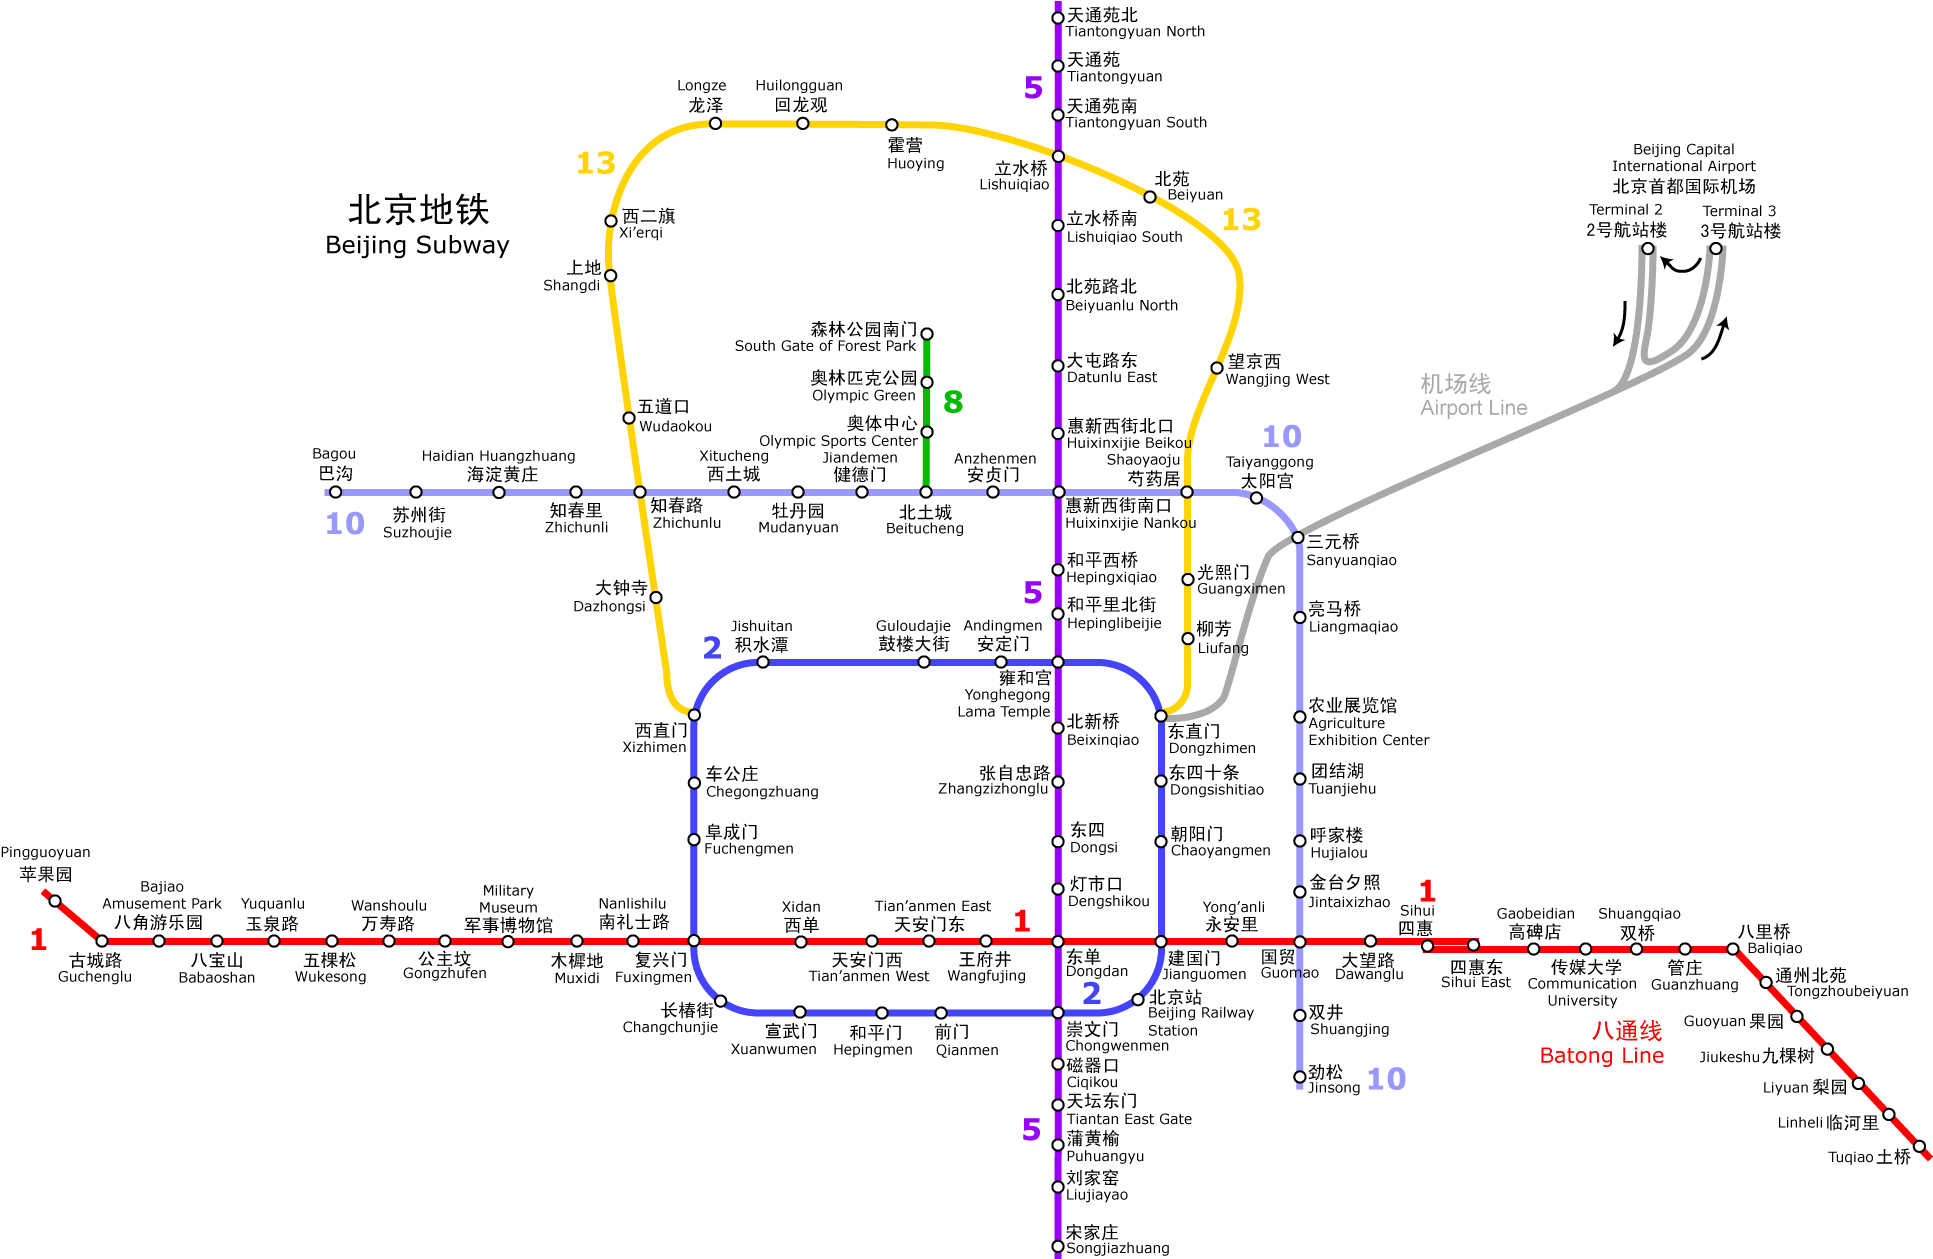 metro-pekina-2006